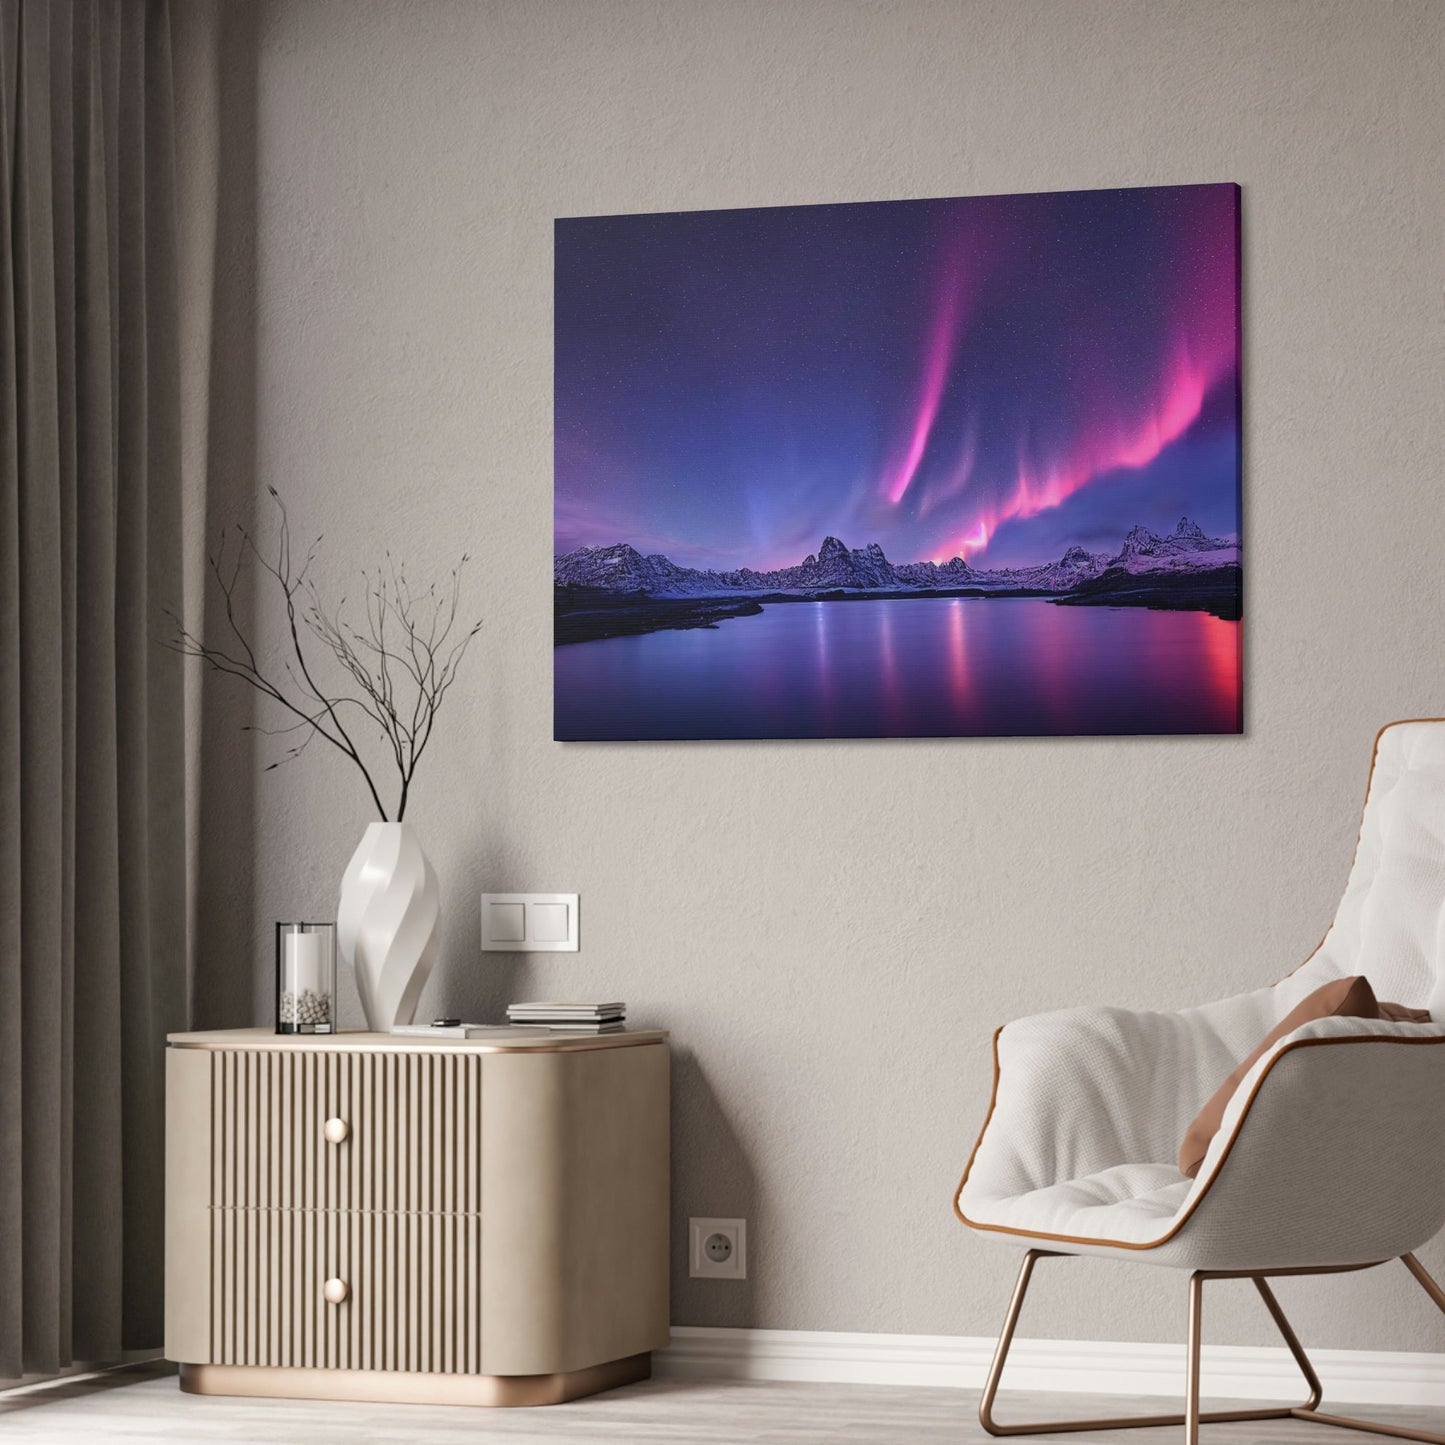 Majestic Aurora Borealis: A Celestial Spectacle on Canvas